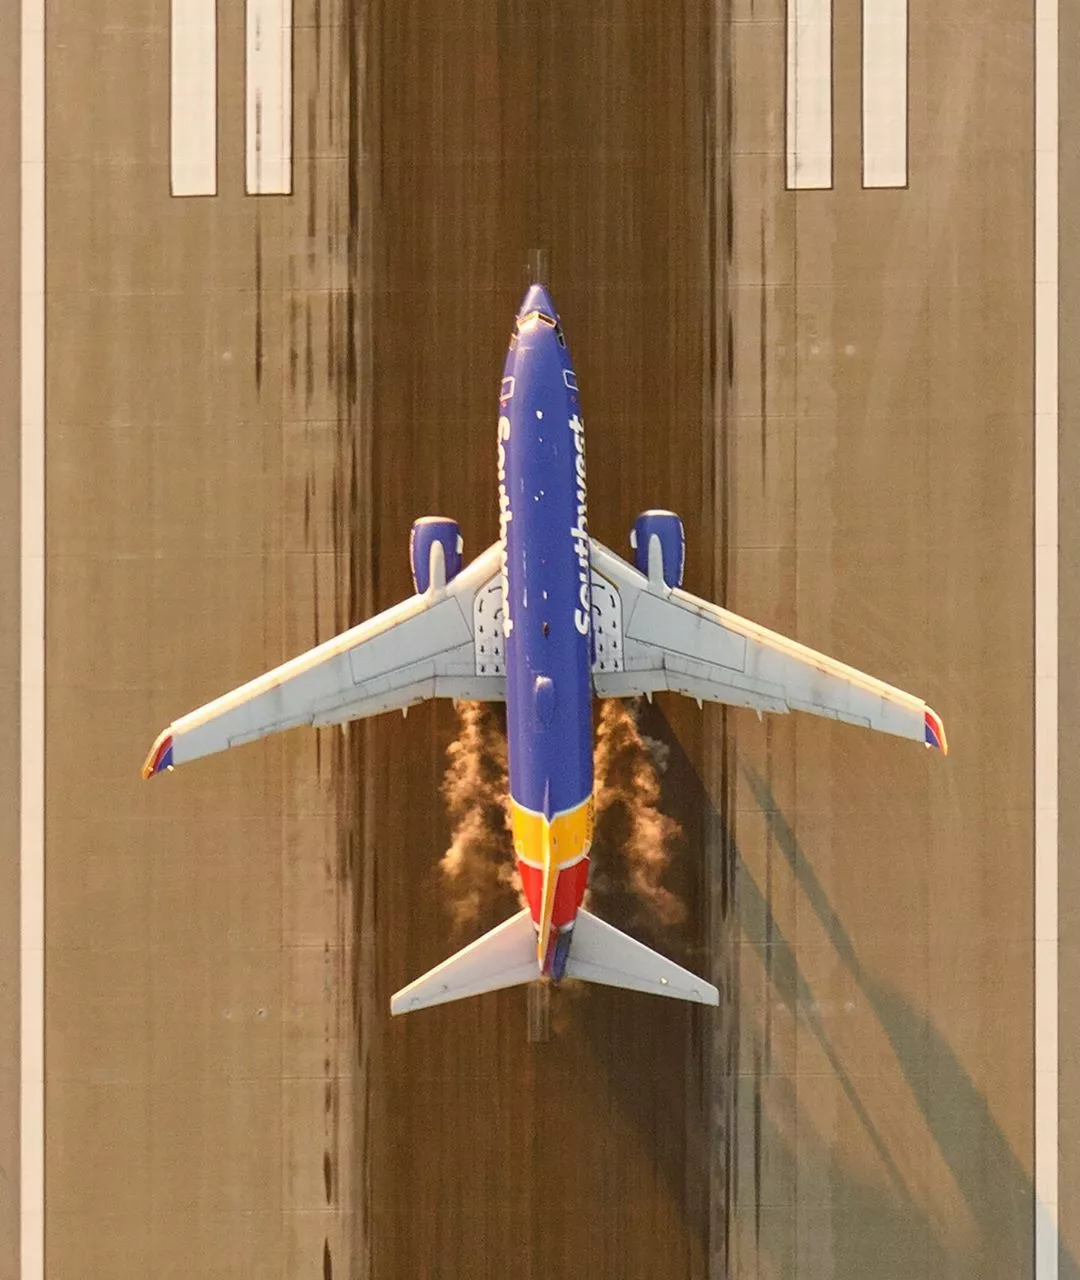 Southwest Airplane on Runway